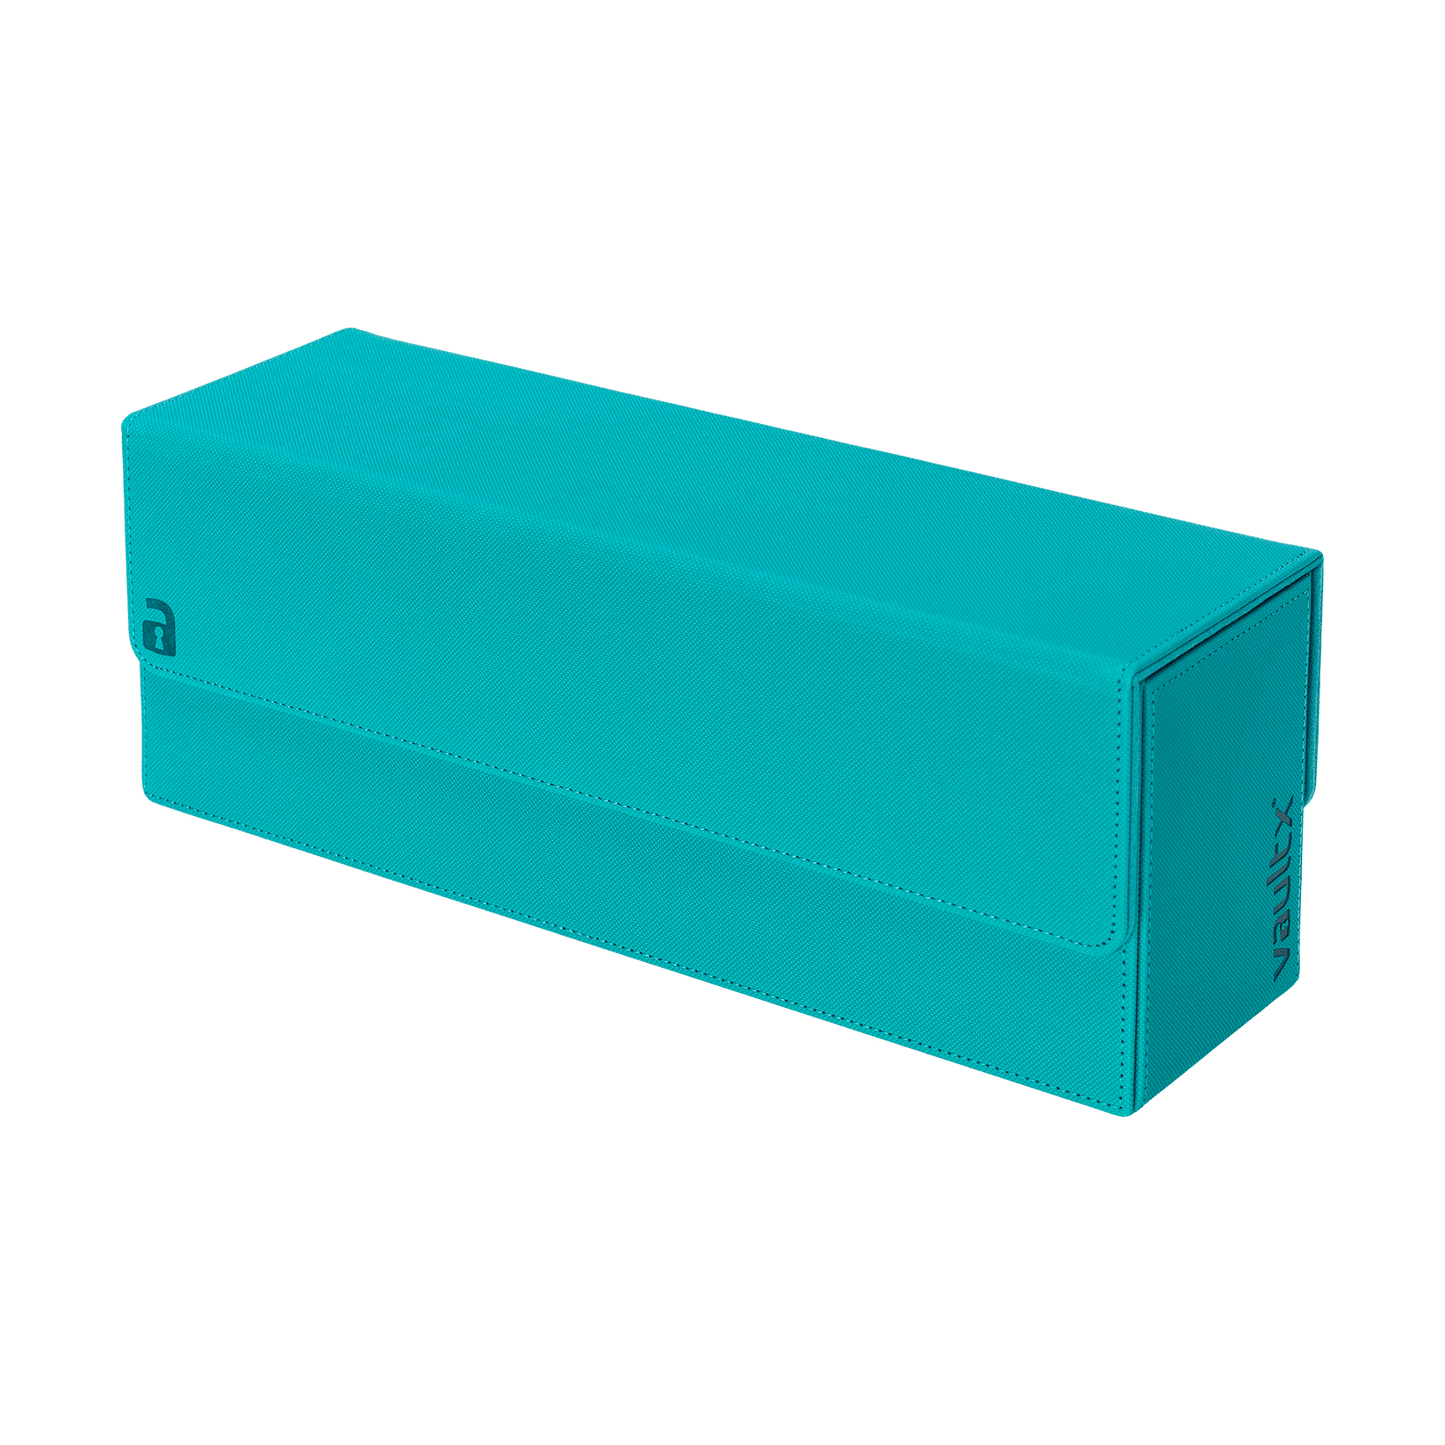 Vault X - Exo-Tec - Card Box 450+ Ocean Blue